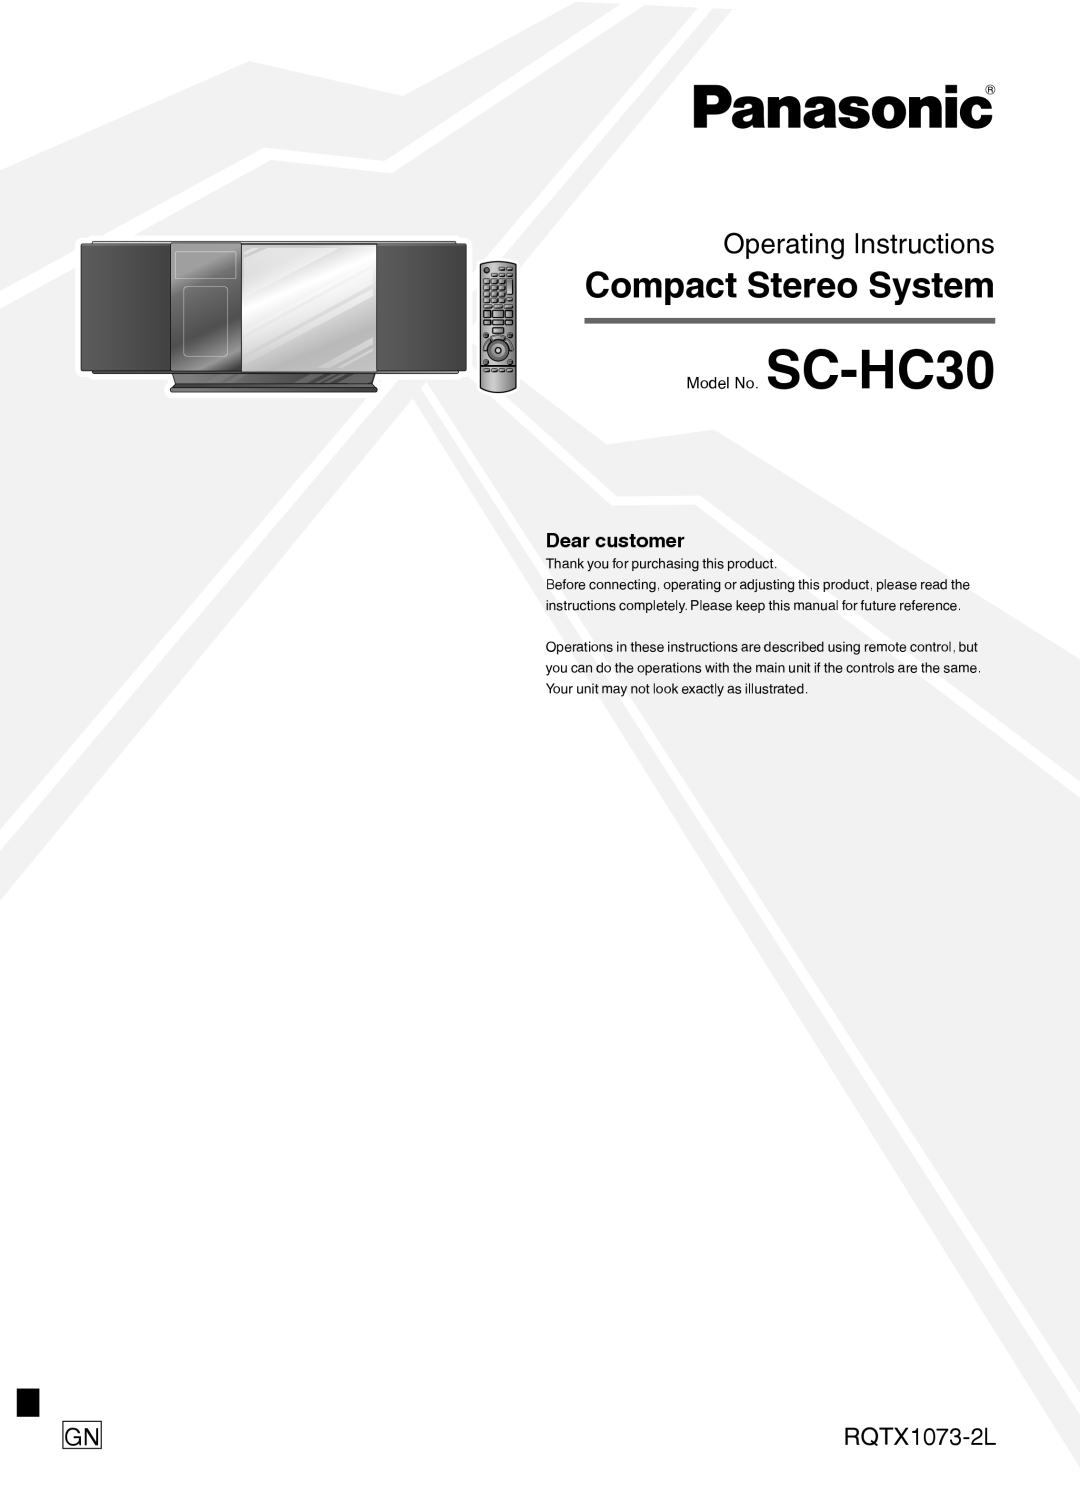 Panasonic SC-HC30 operating instructions Compact Stereo System Sistema estéreo compacto, RQTX1066-2P, Estimado cliente 